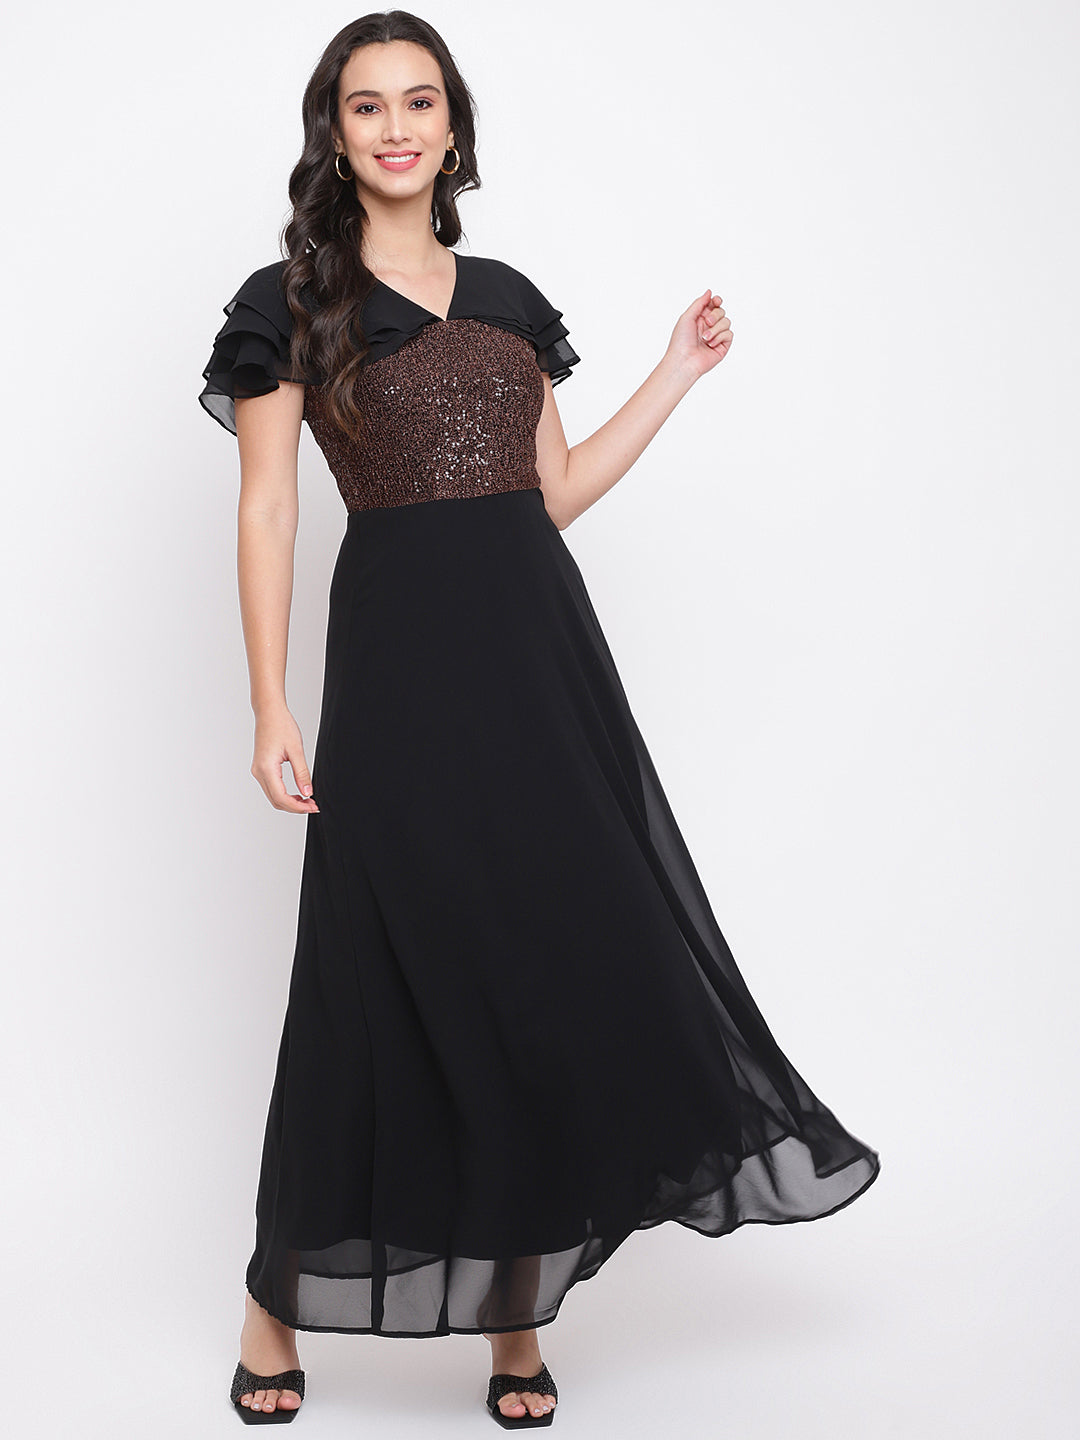 Black Half Sleeve Maxi With Ruffles Dress